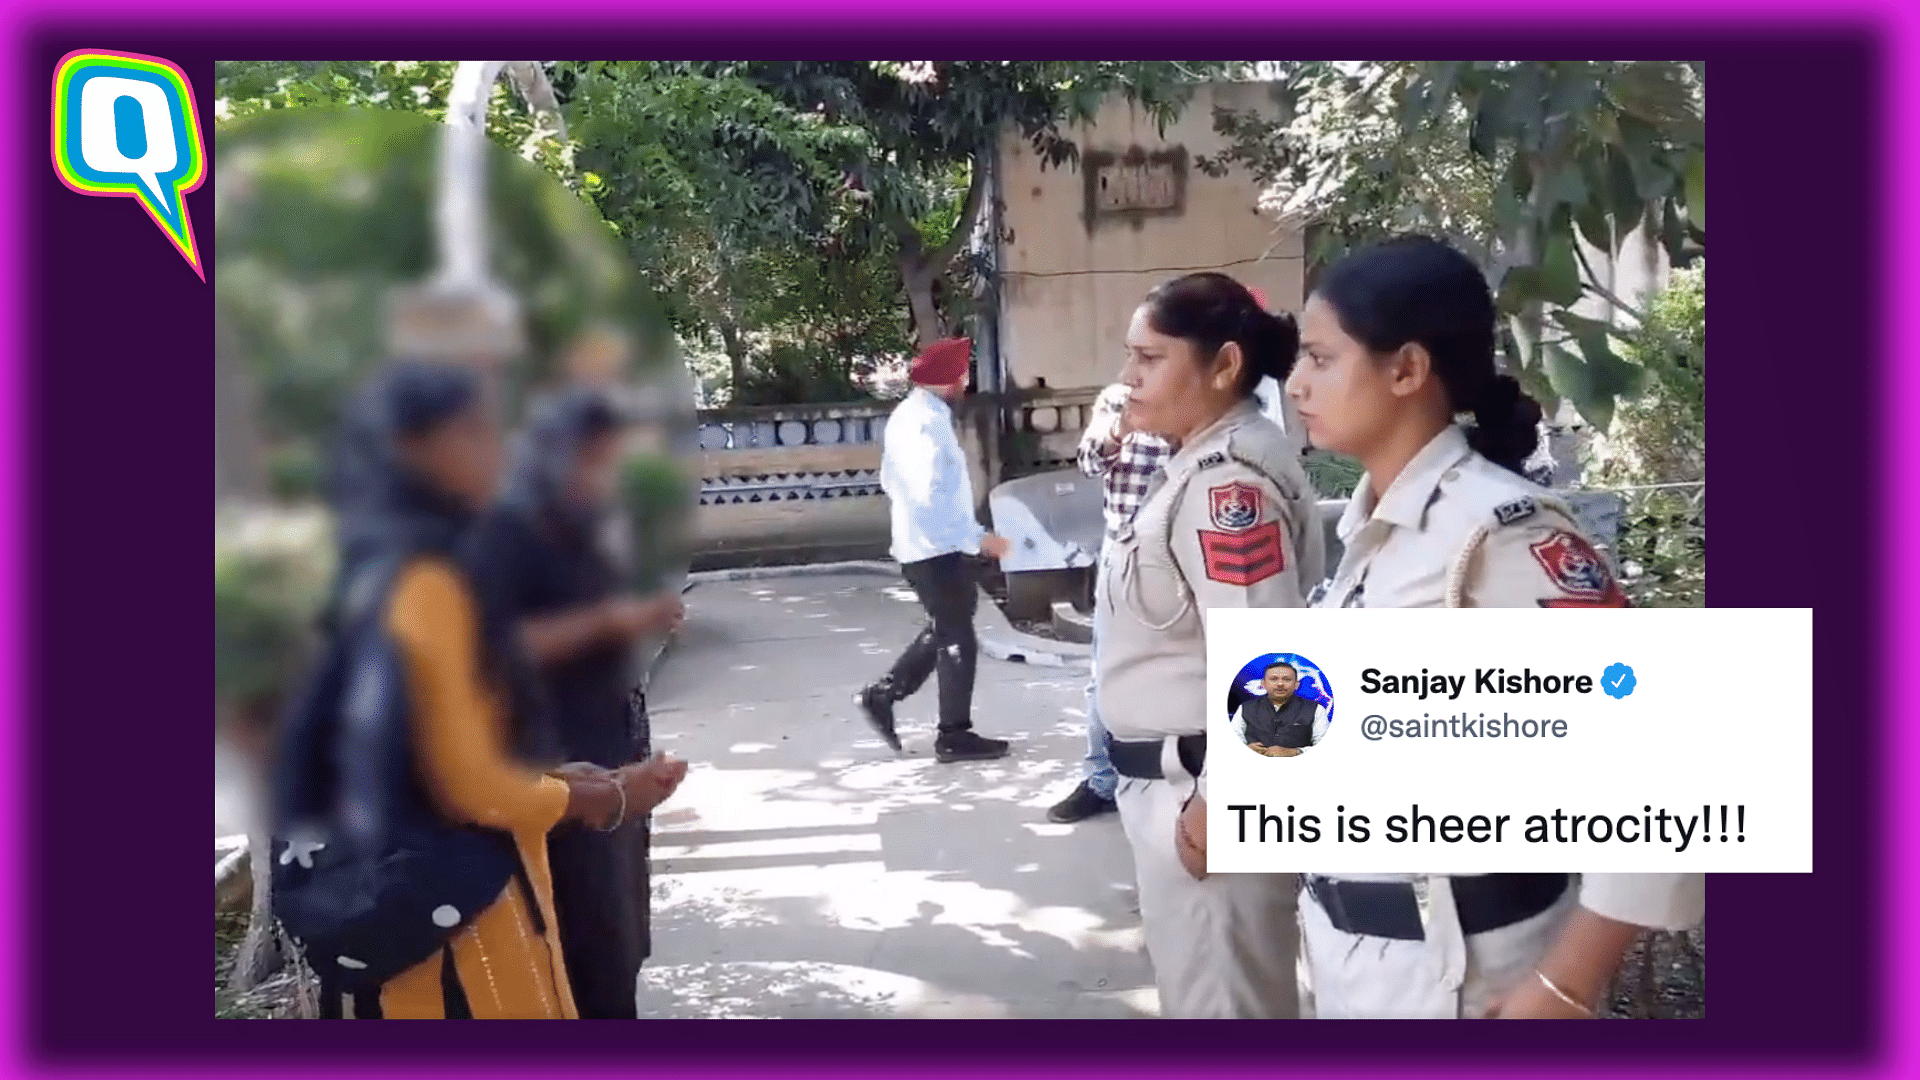 <div class="paragraphs"><p>Two Punjab cops face heavy criticism after a video showed them thrashing students.</p></div>